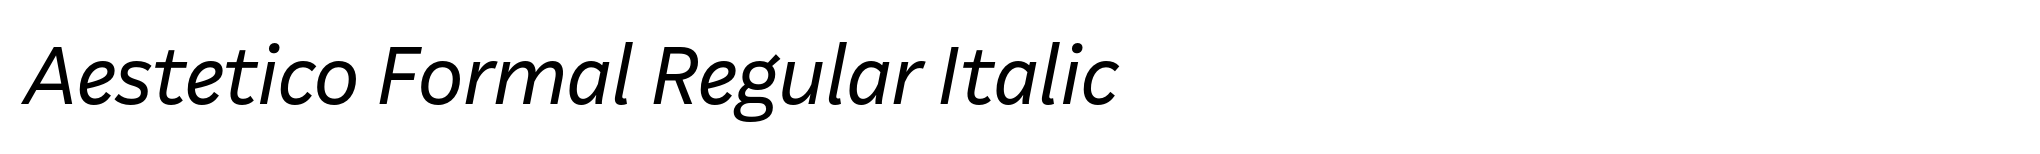 Aestetico Formal Regular Italic image